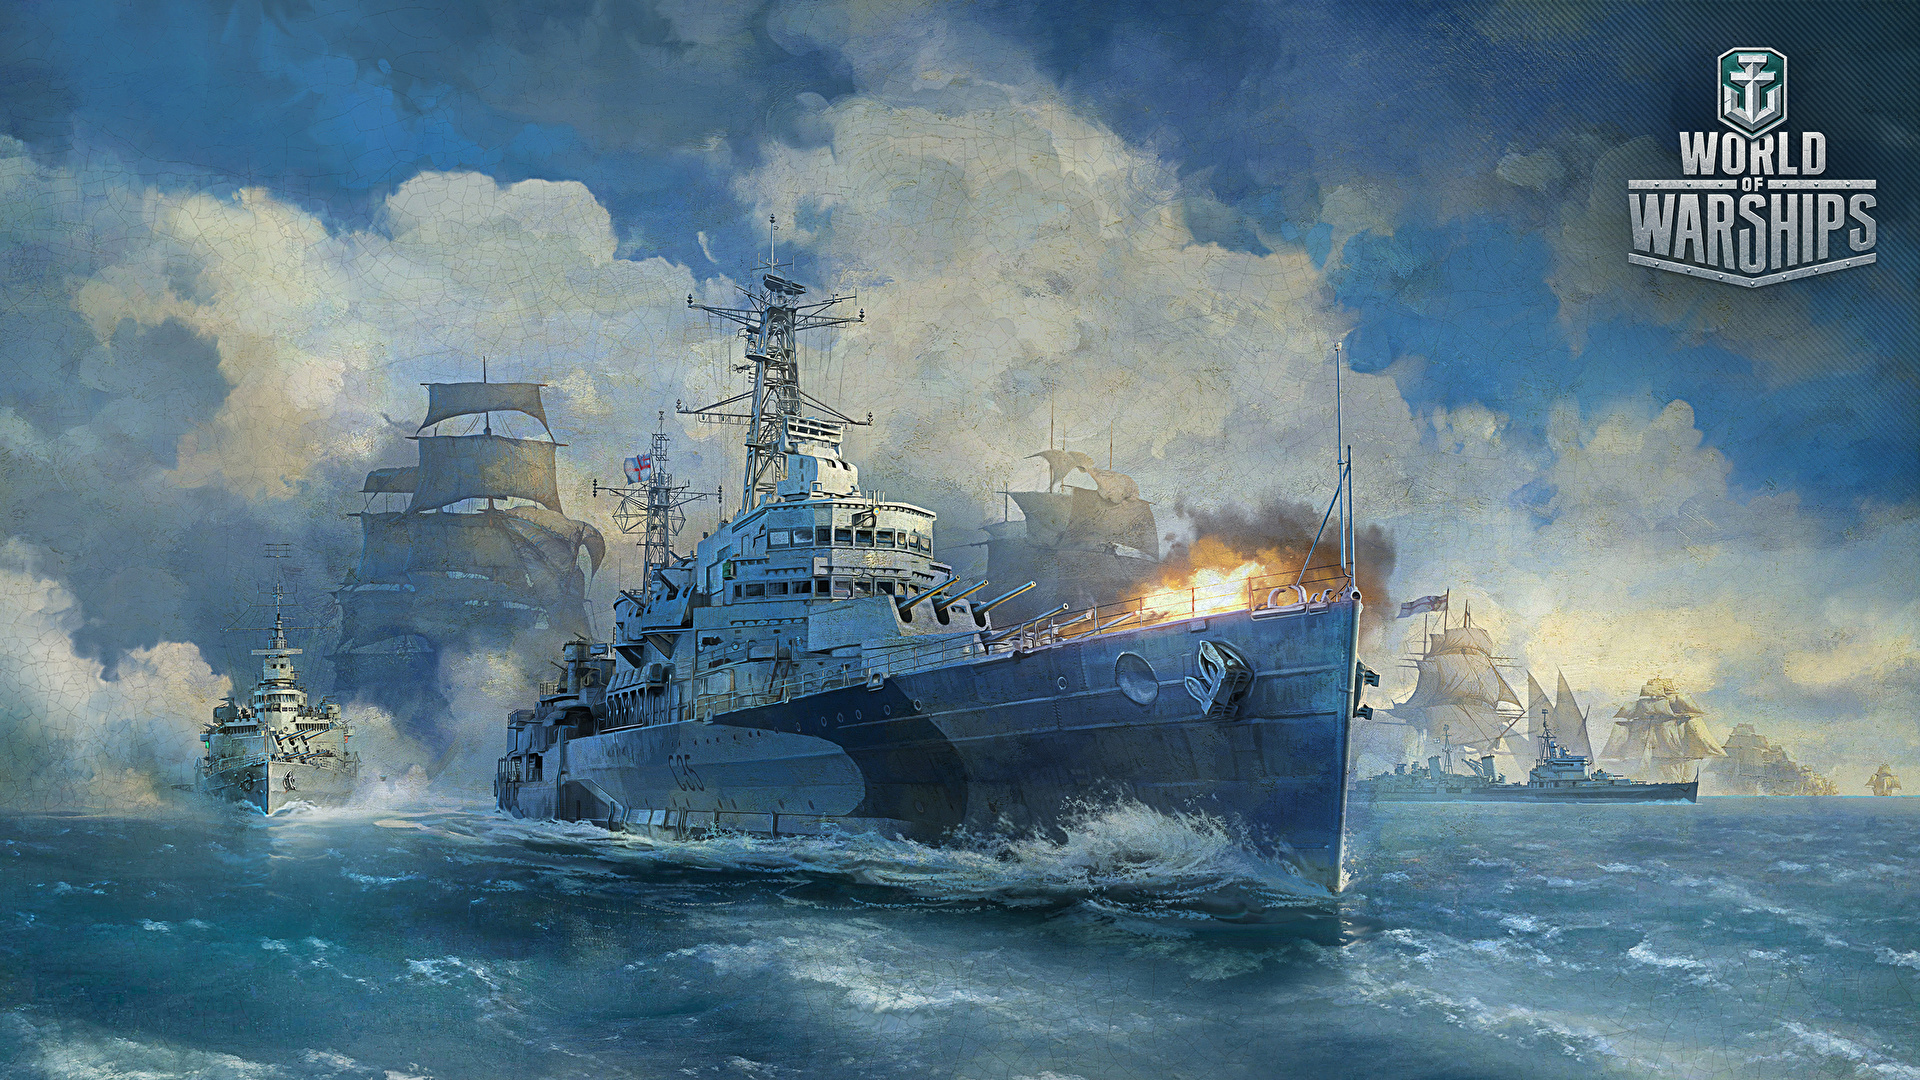 Wallpaper World of warships, military, ship, game